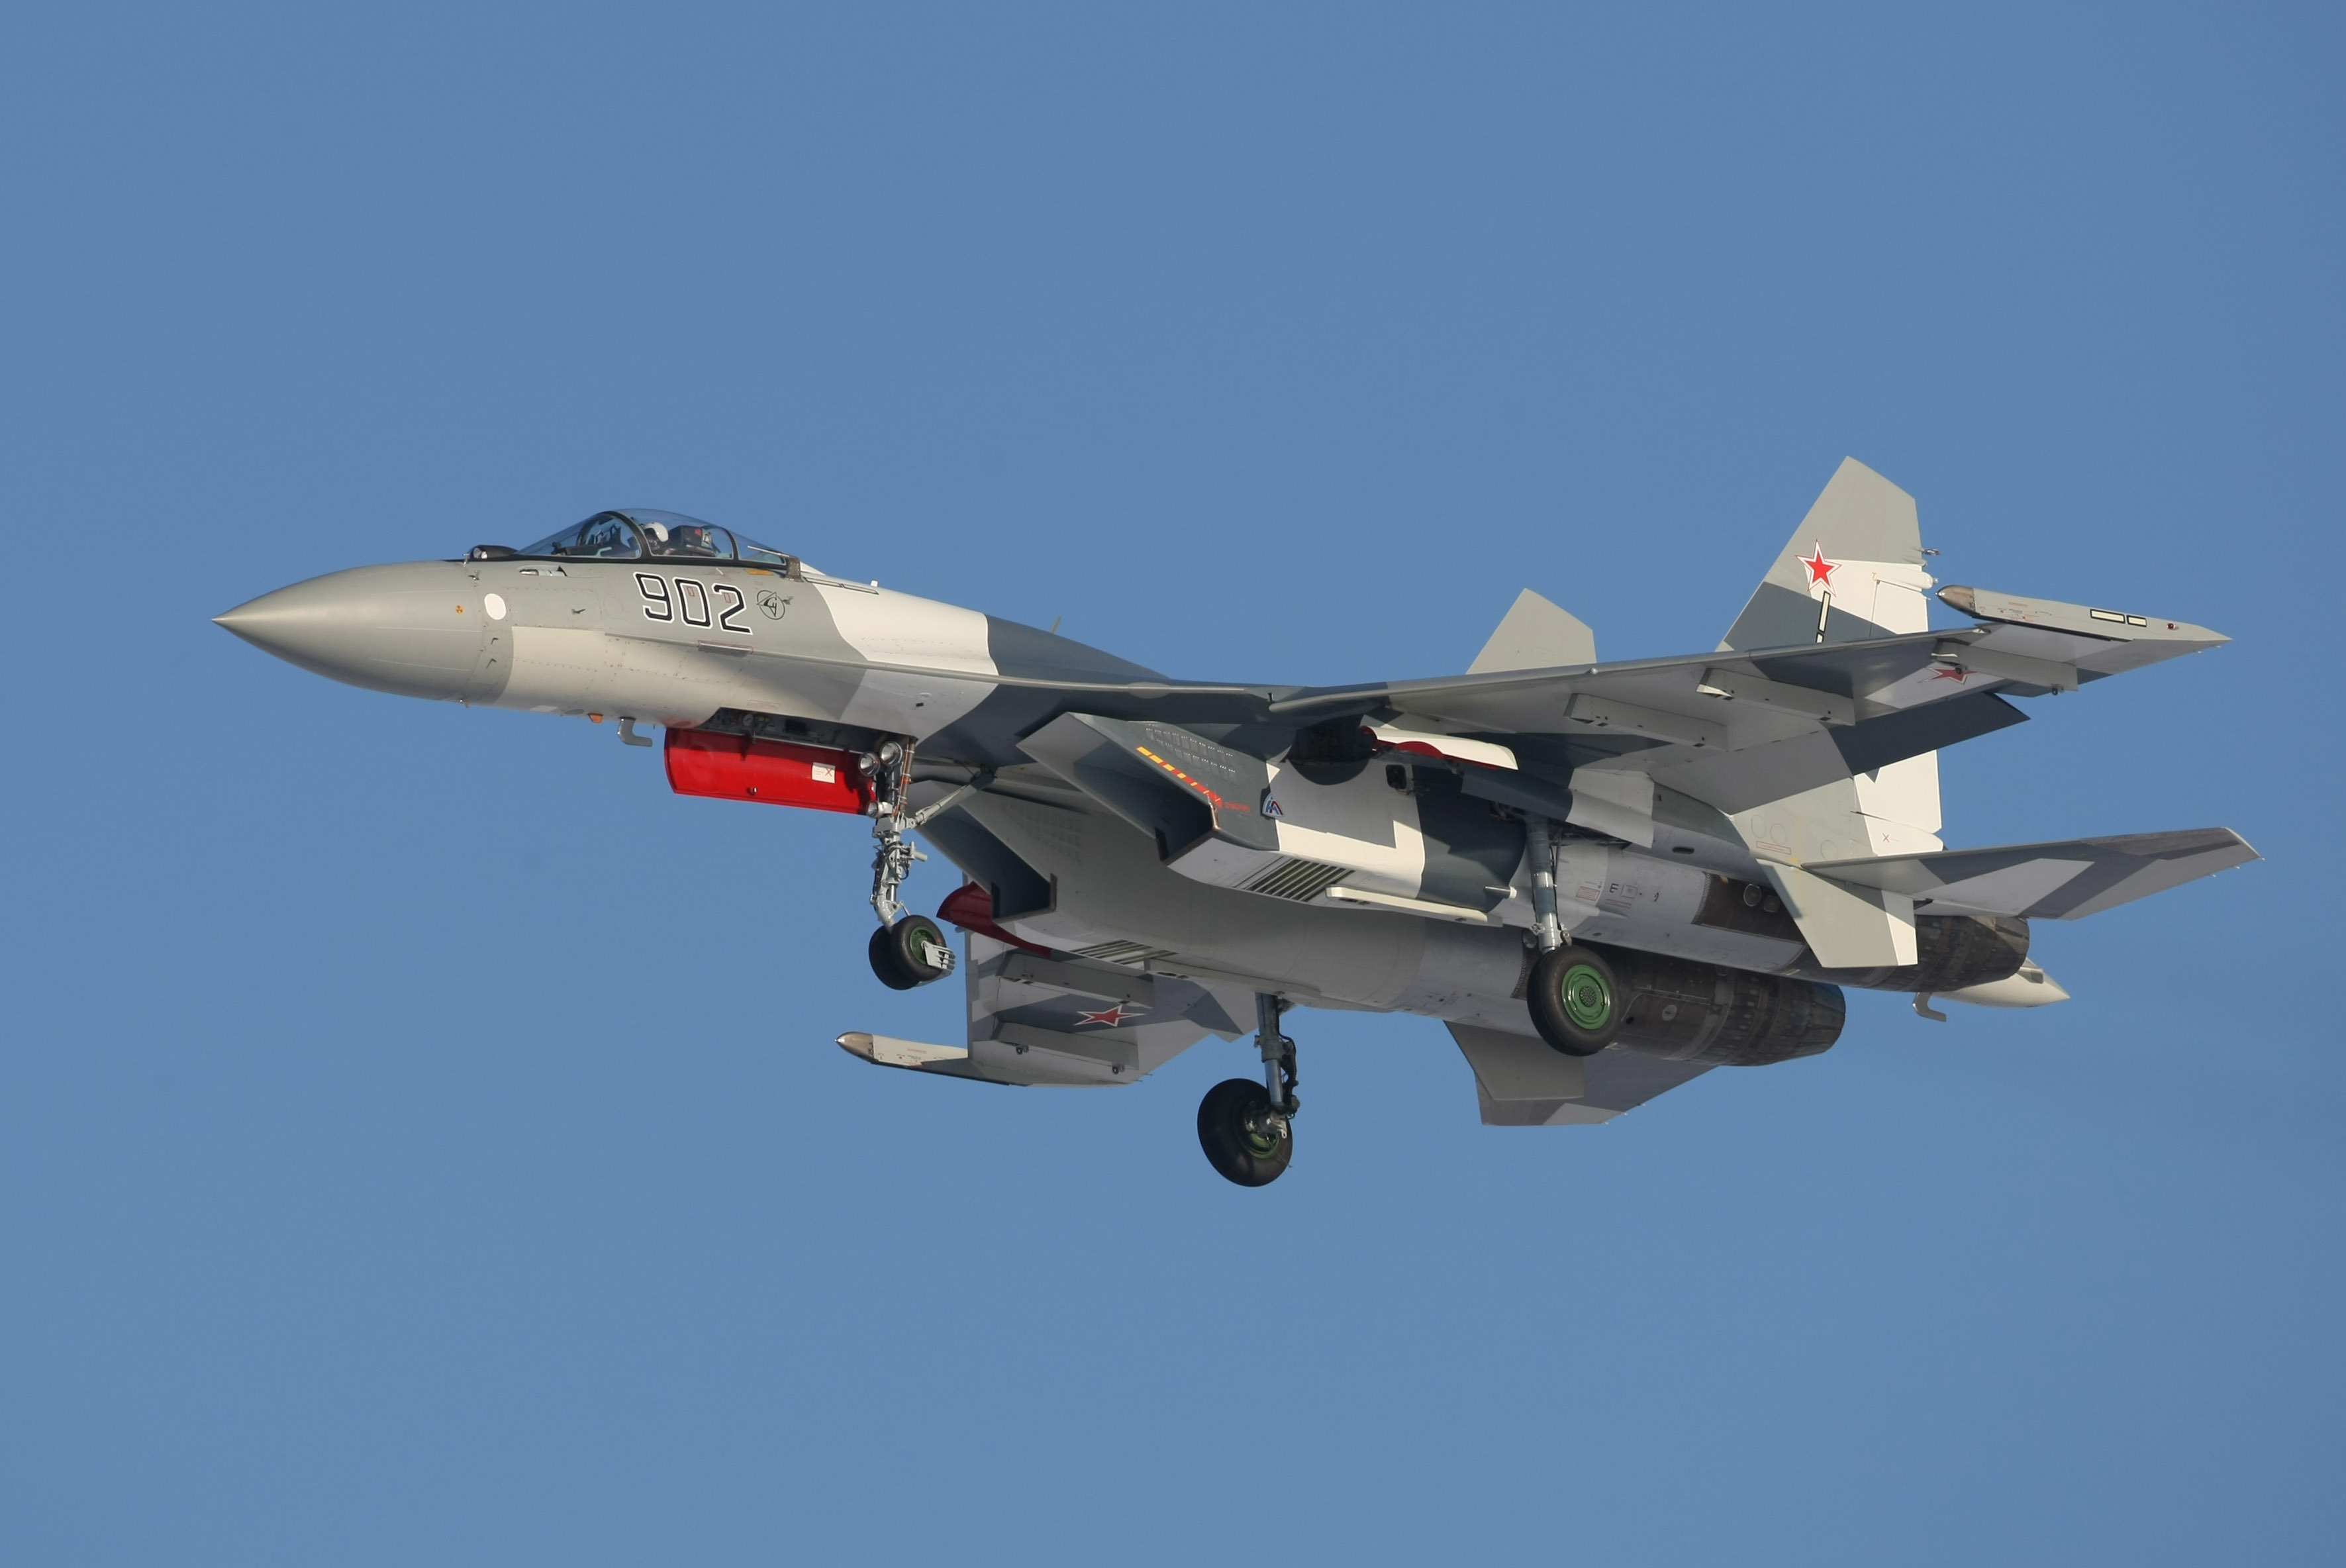 Sukhoi Su 35 Jet Fighter Aircraft Warplane Military Air Force 3543x2368